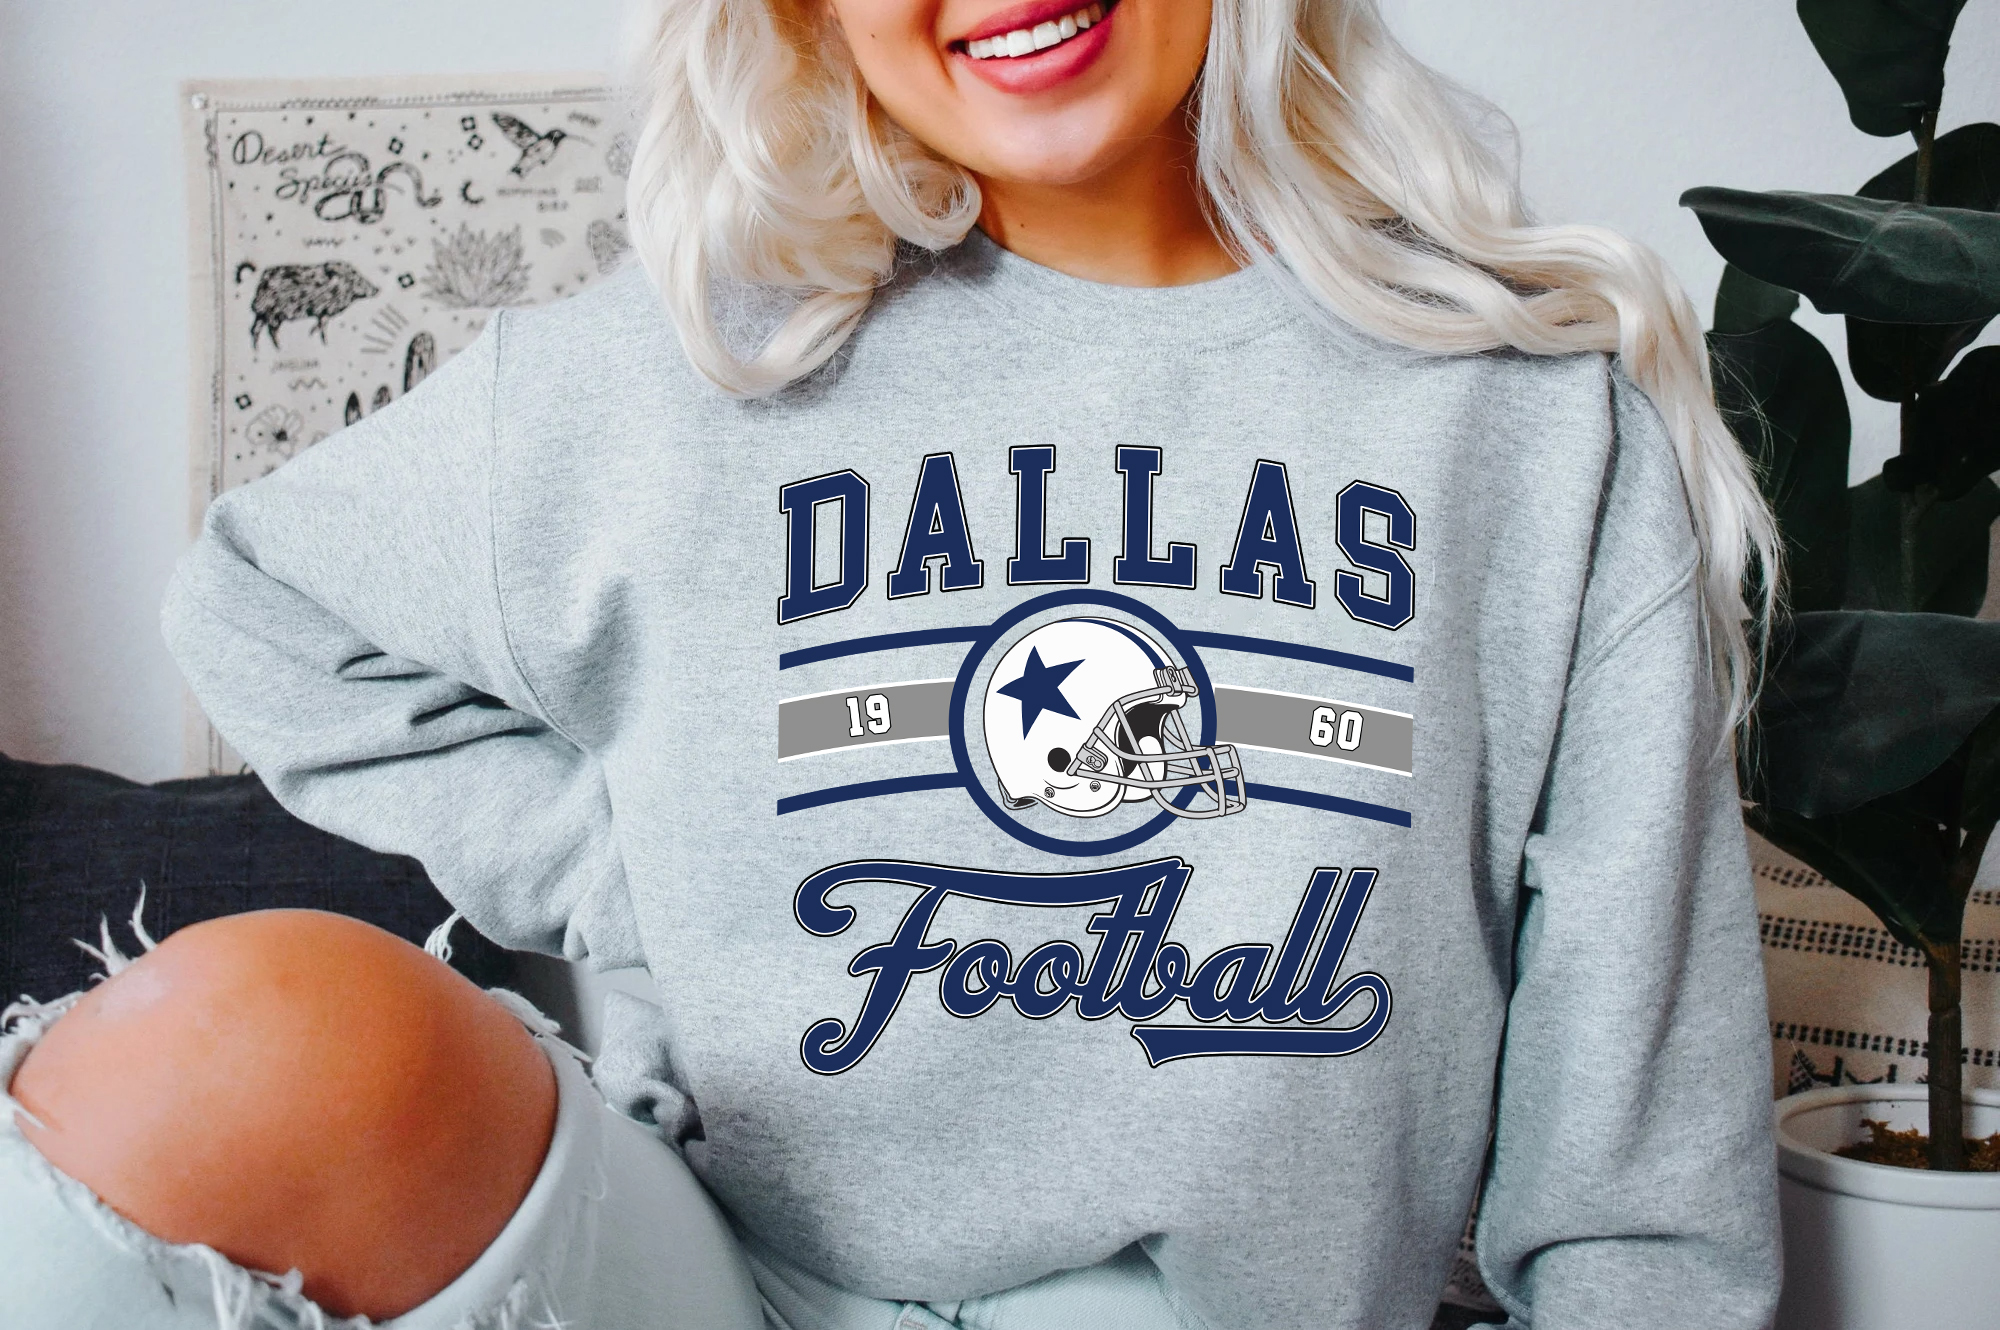 Vintage Dallas Cowboys Football Sweatshirt - Happy Place for Music Lovers